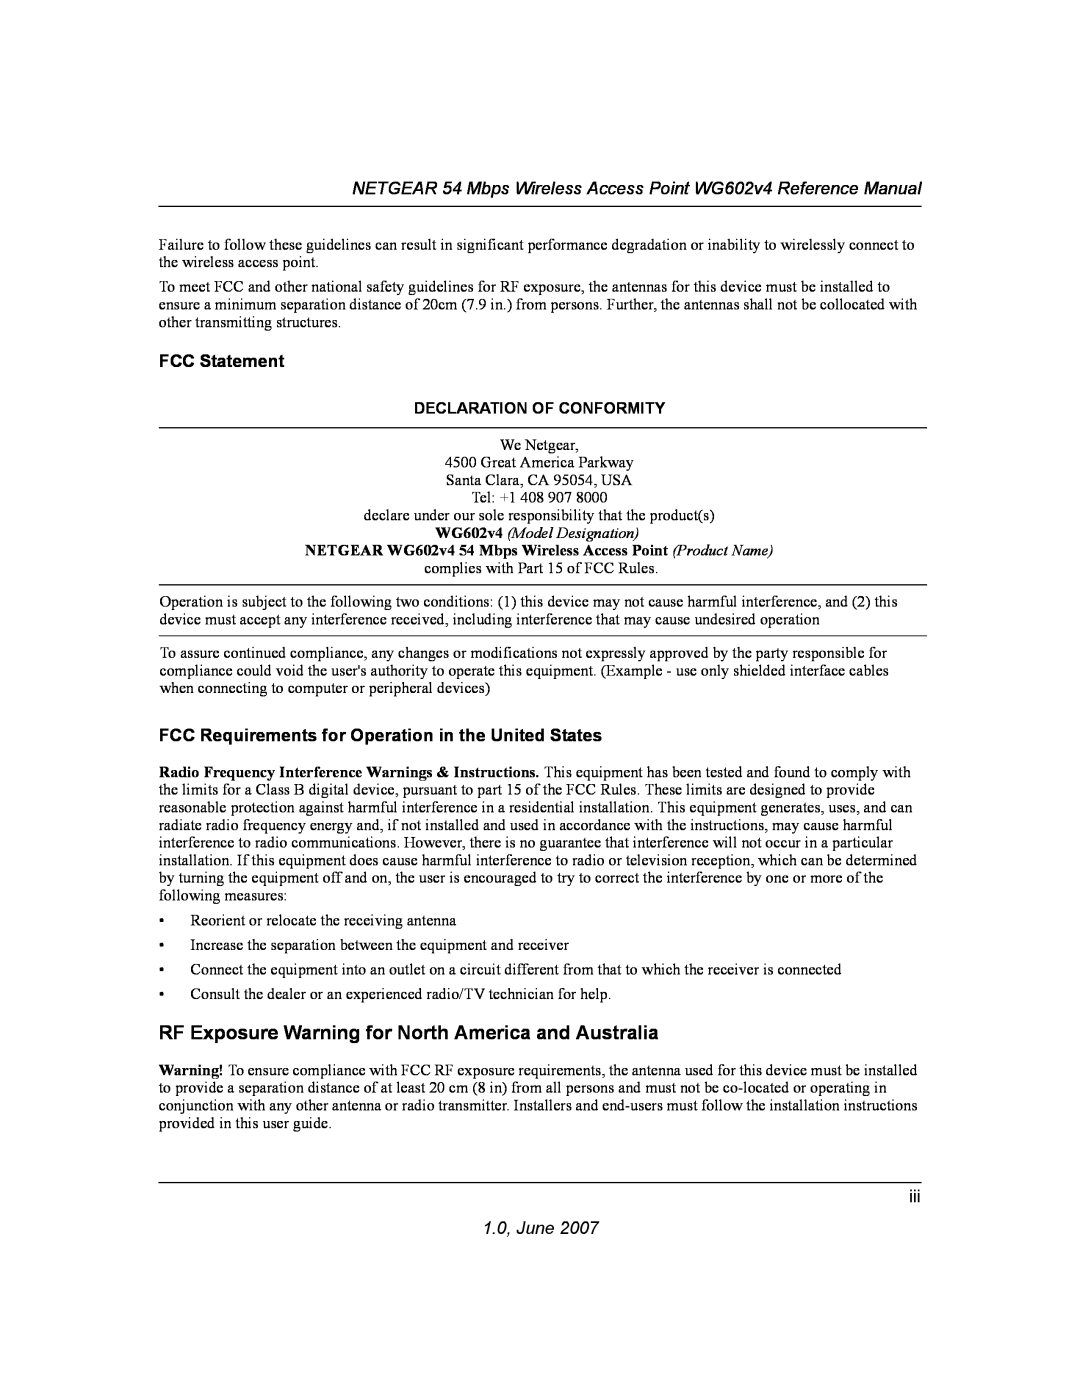 NETGEAR WG602V4 RF Exposure Warning for North America and Australia, FCC Statement, 1.0, June, WG602v4 Model Designation 